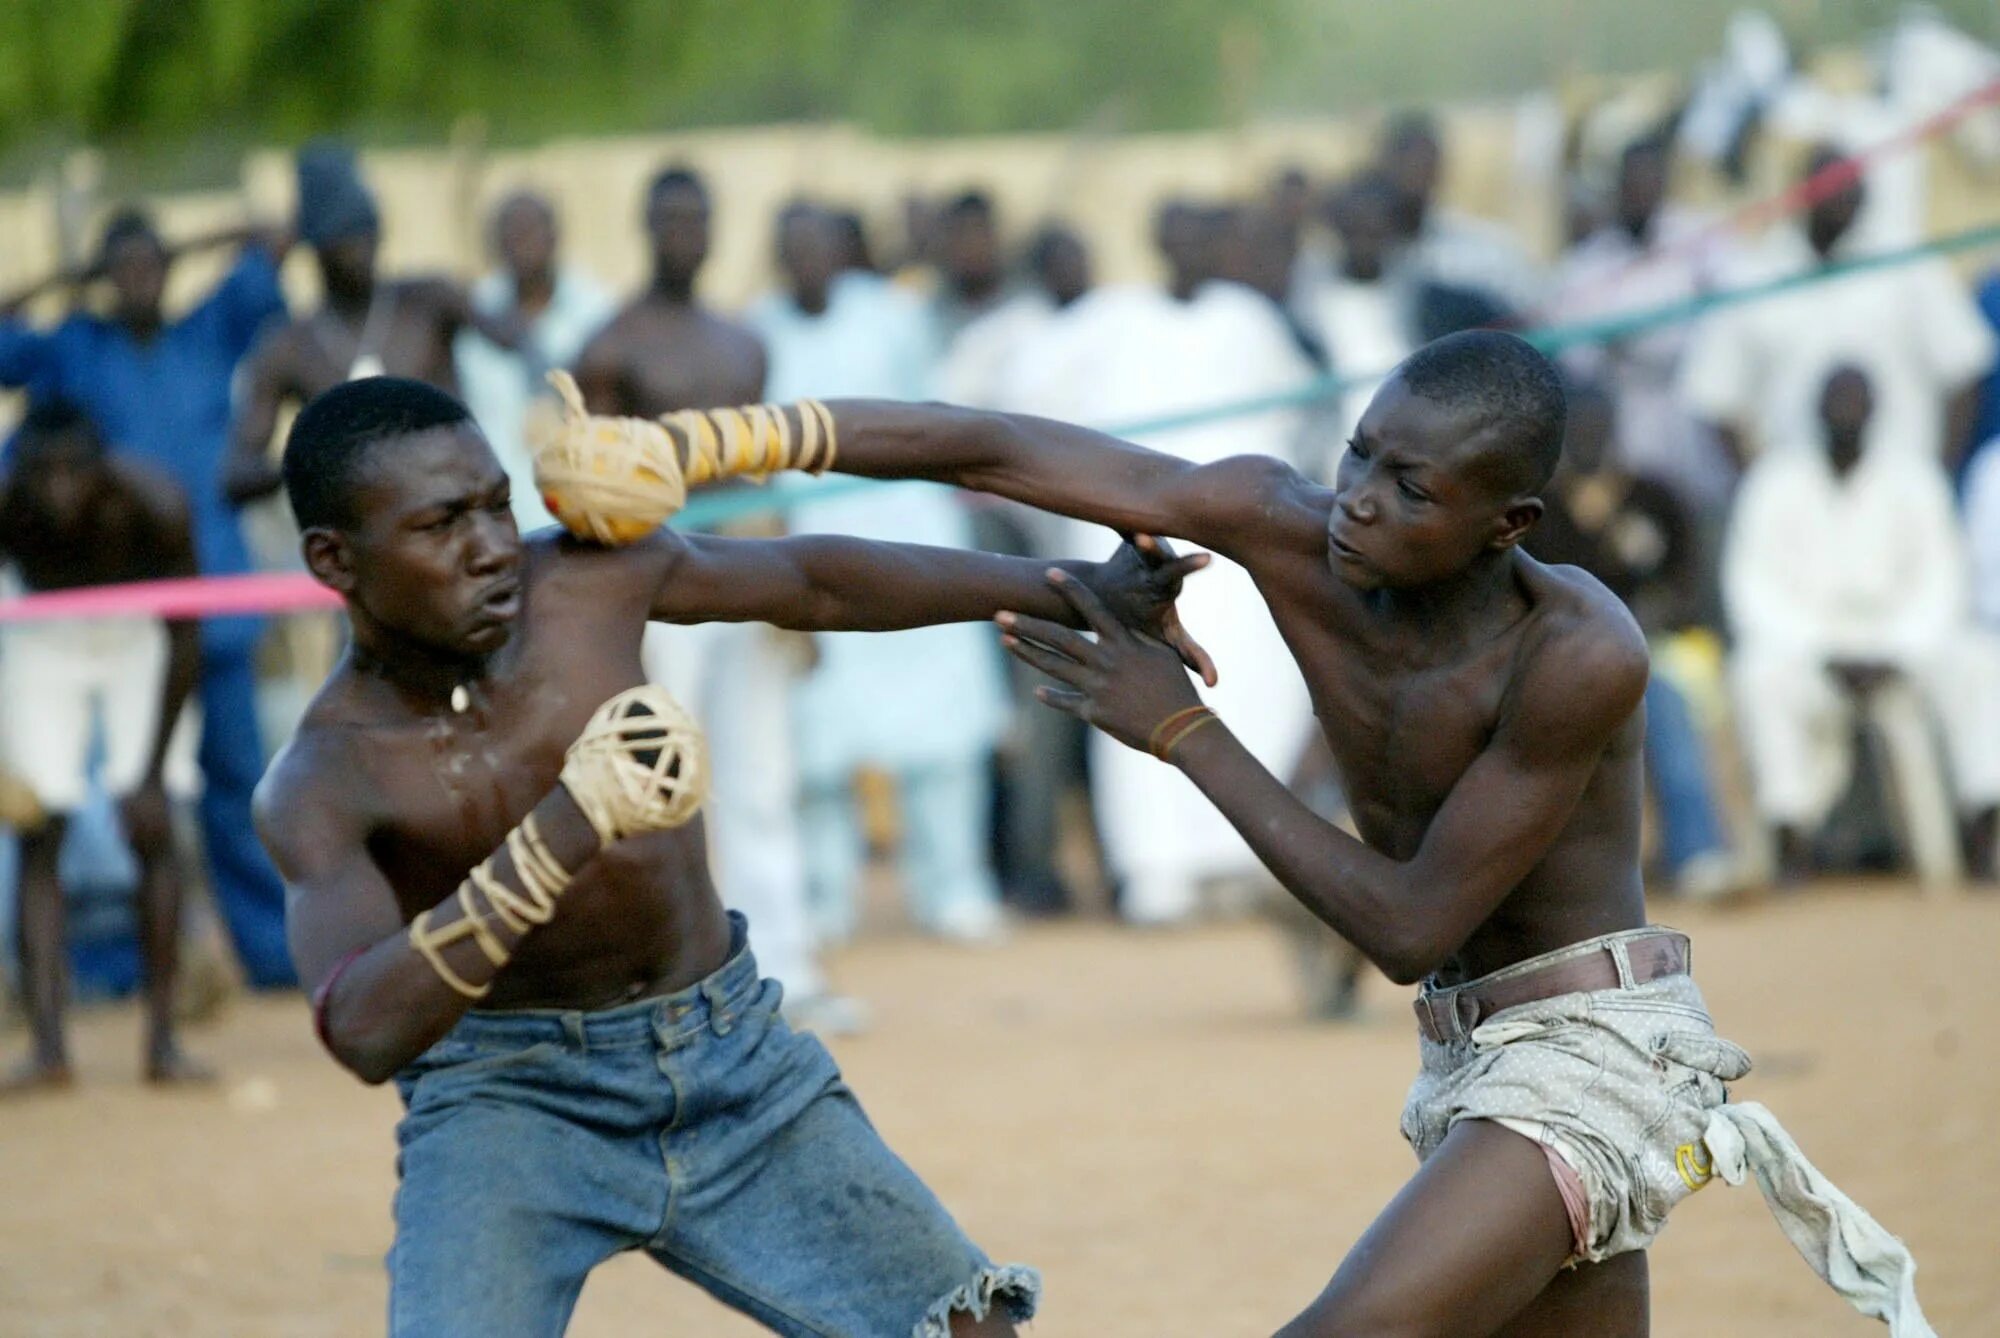 Africa sports. Нигерийский бокс дамбе. Африканский бокс дамбе. Африканские боксеры.